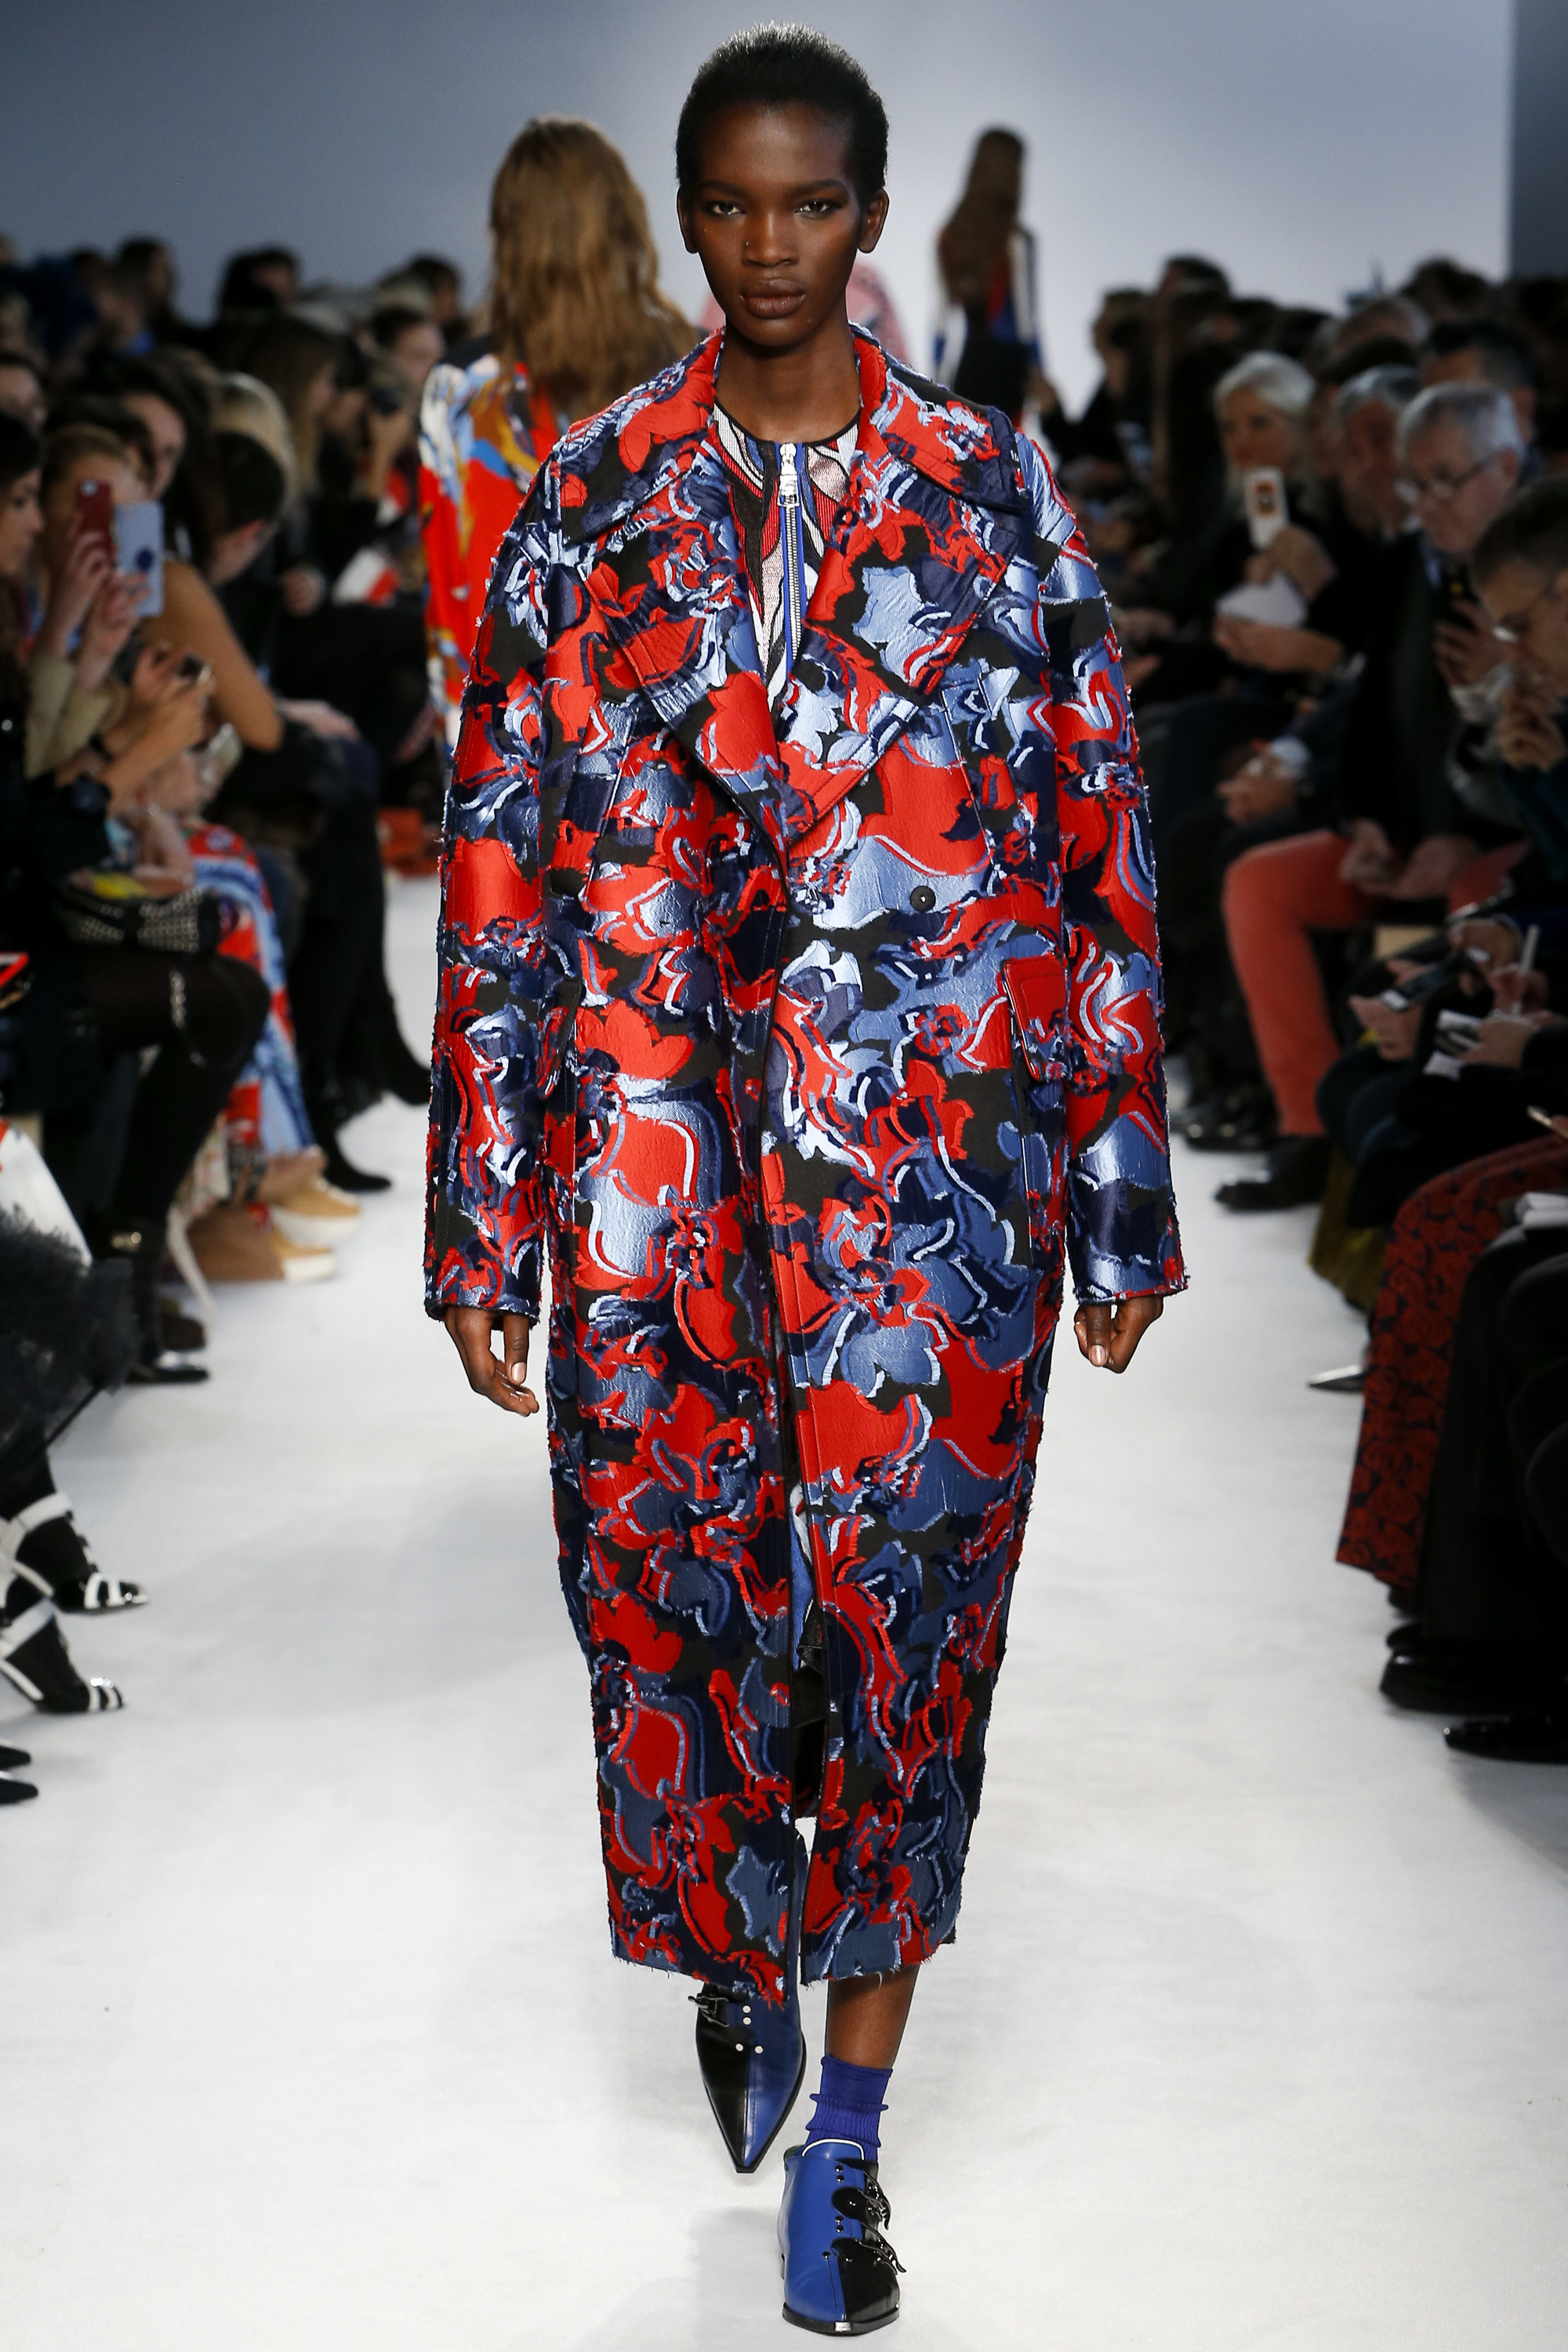 Emilio Pucci Spring 2013 - Red Carpet Fashion Awards